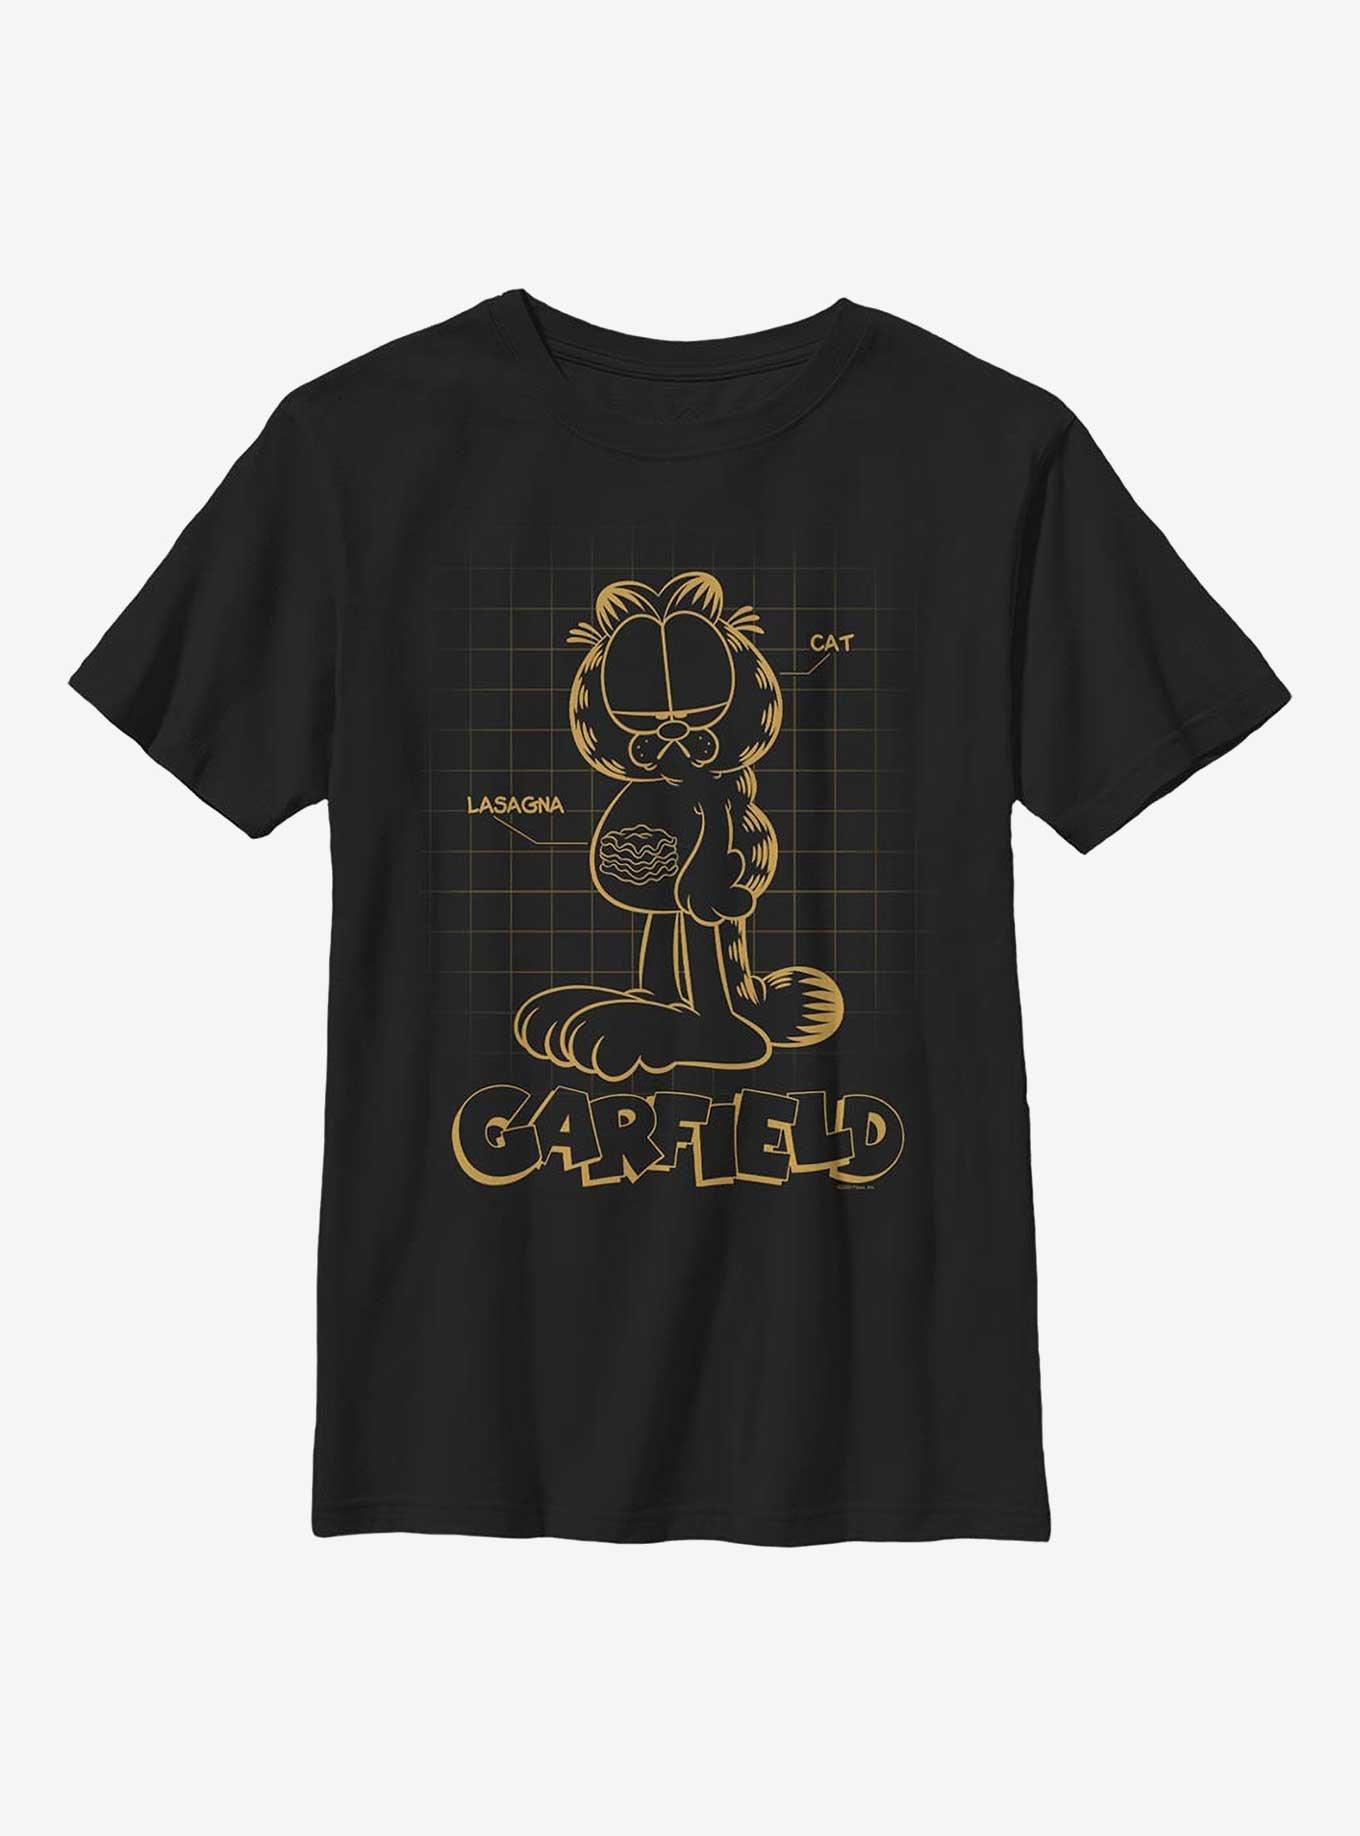 Garfield Cat Schematic Youth T-Shirt, BLACK, hi-res